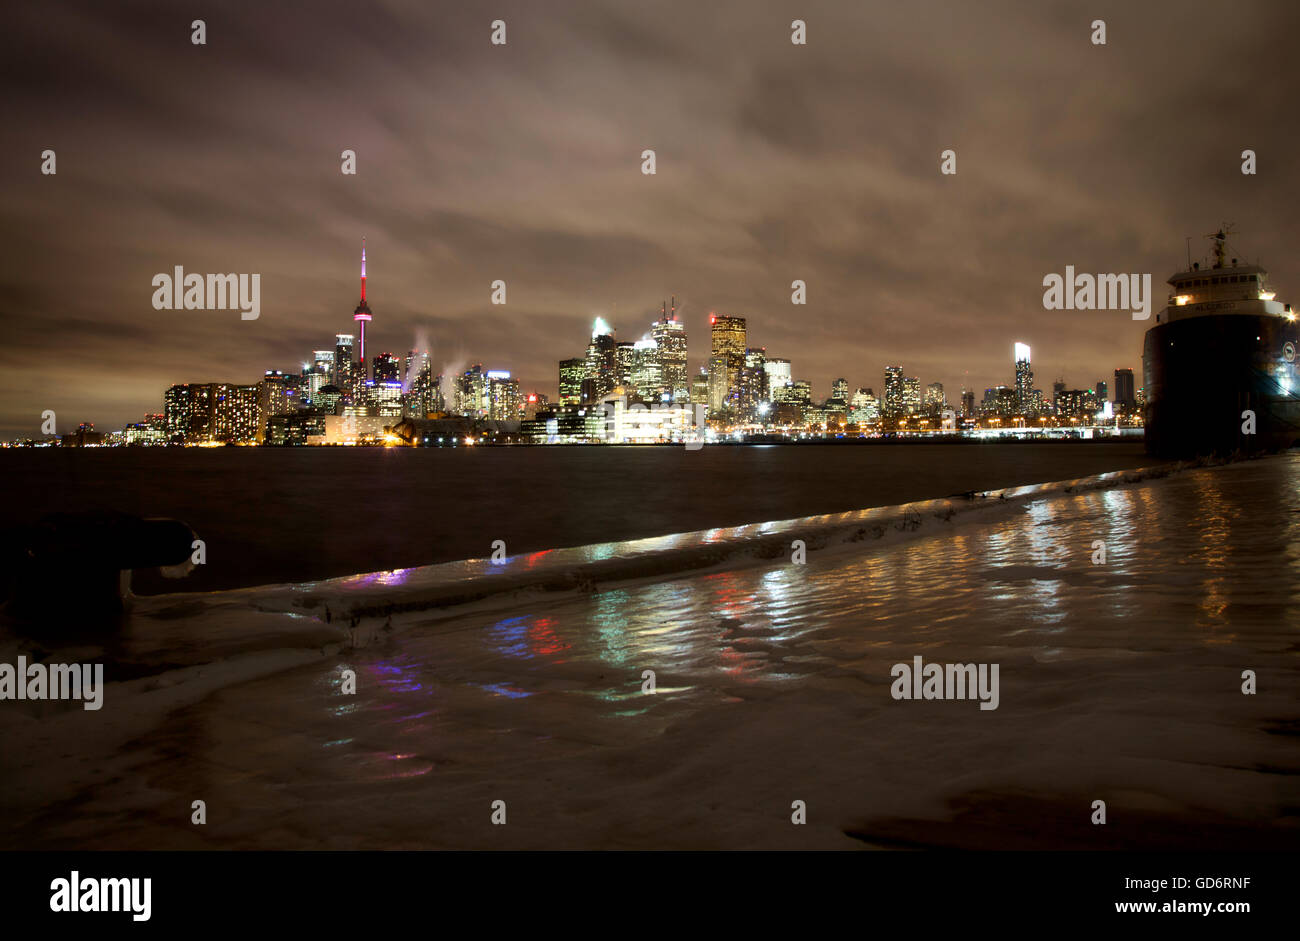 Toronto Polson Pier Winter ice storm skyline city Stock Photo